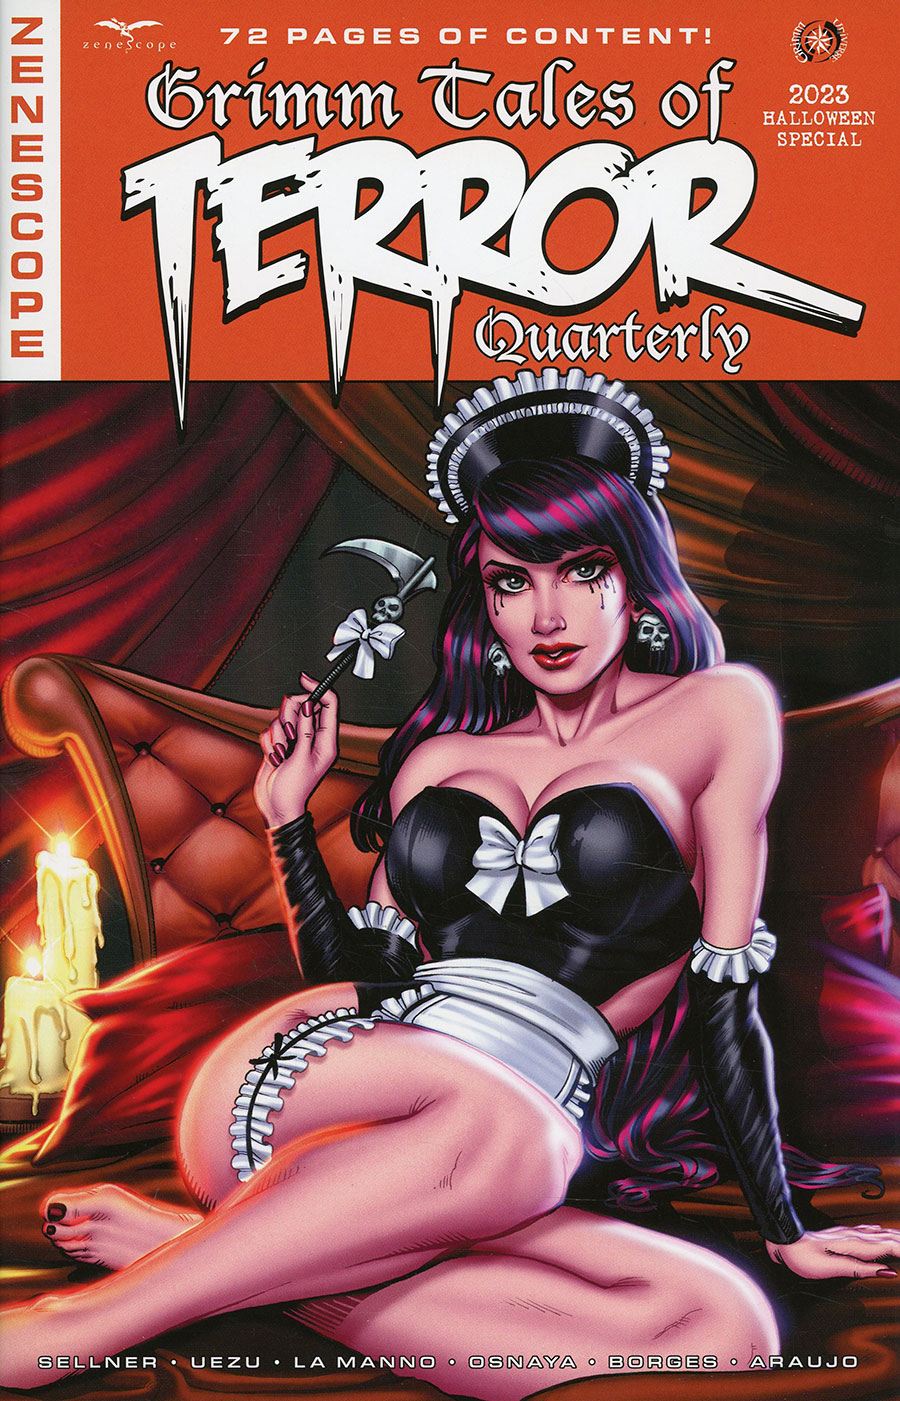 Grimm Fairy Tales Presents Grimm Tales Of Terror Quarterly #12 2023 Halloween Special Cover C Maria Laura Sanapo